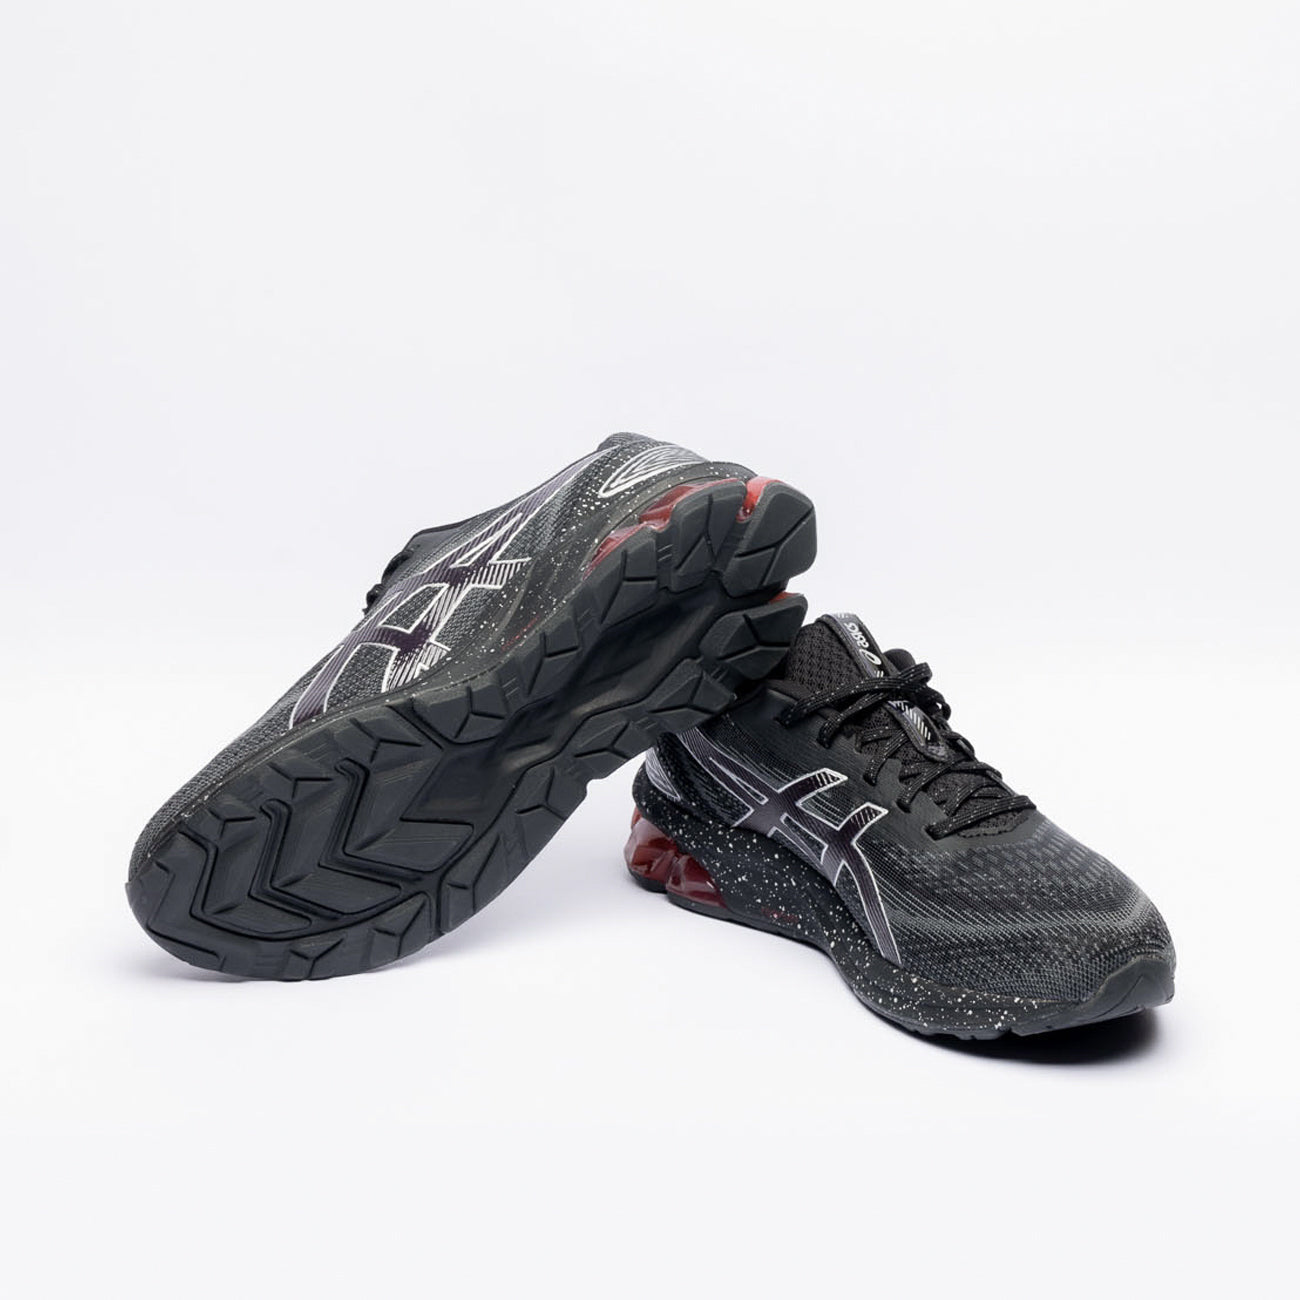 Asics Gel Quantum 180 VII running sneaker in black fabric and burgundy gel